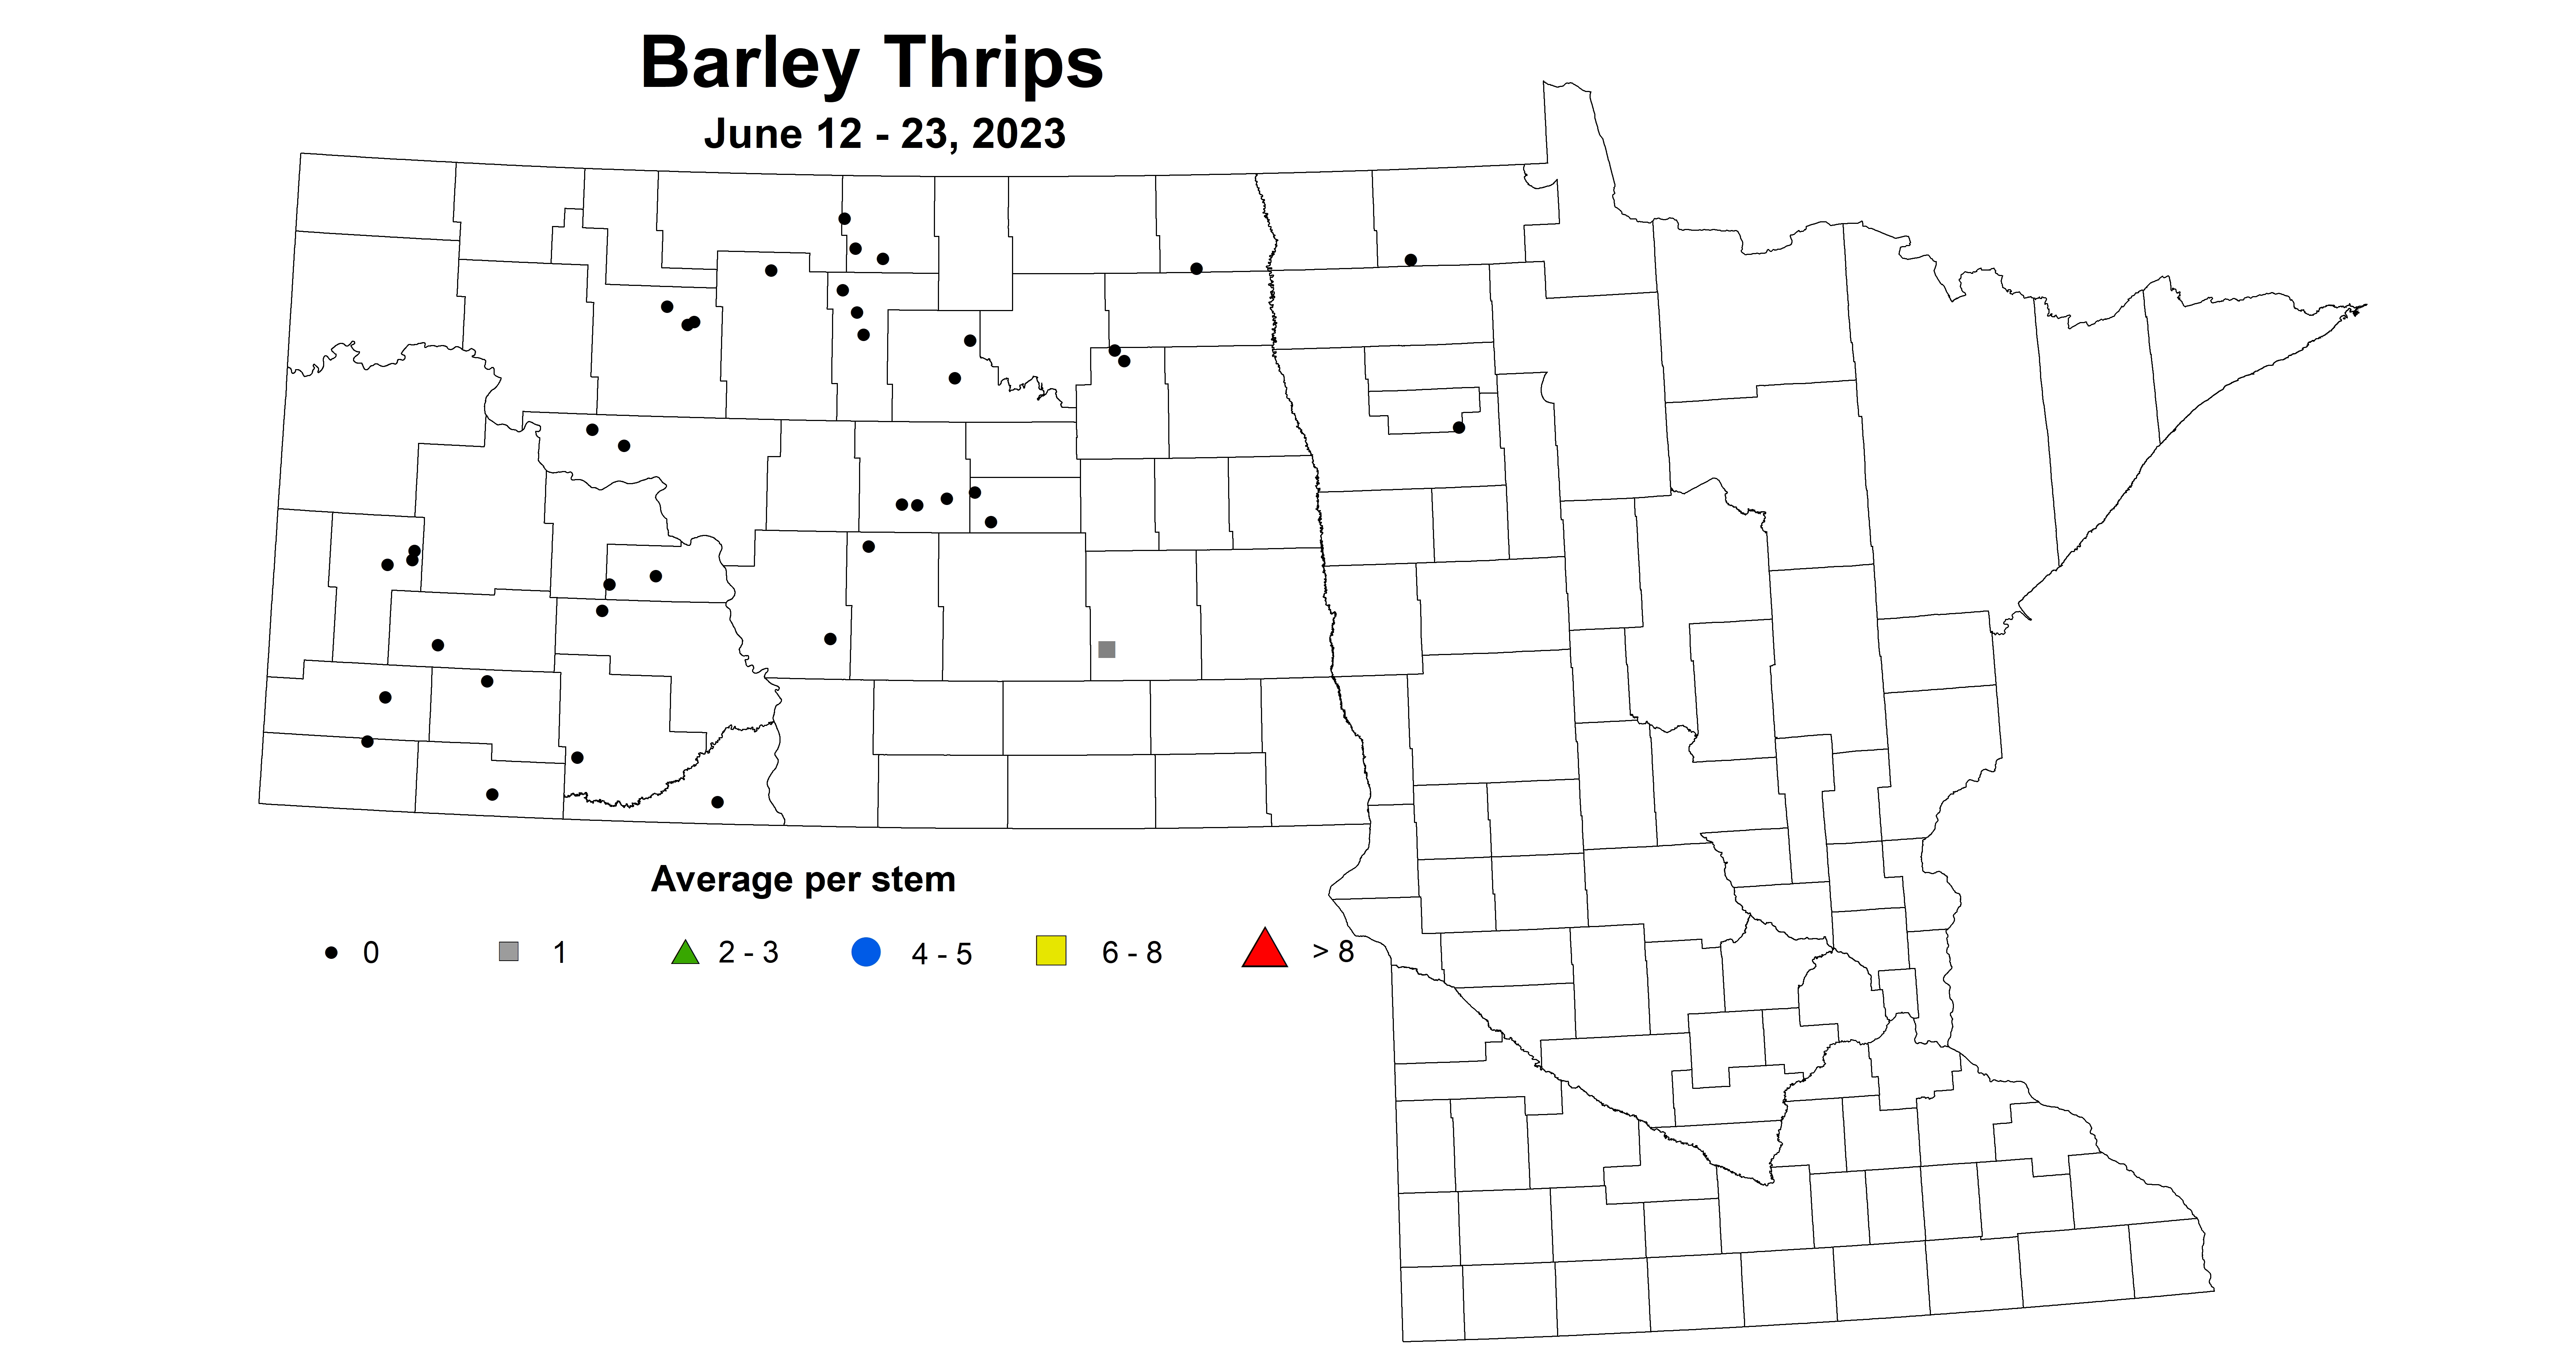 barley thrips June 12-23 2023 updated